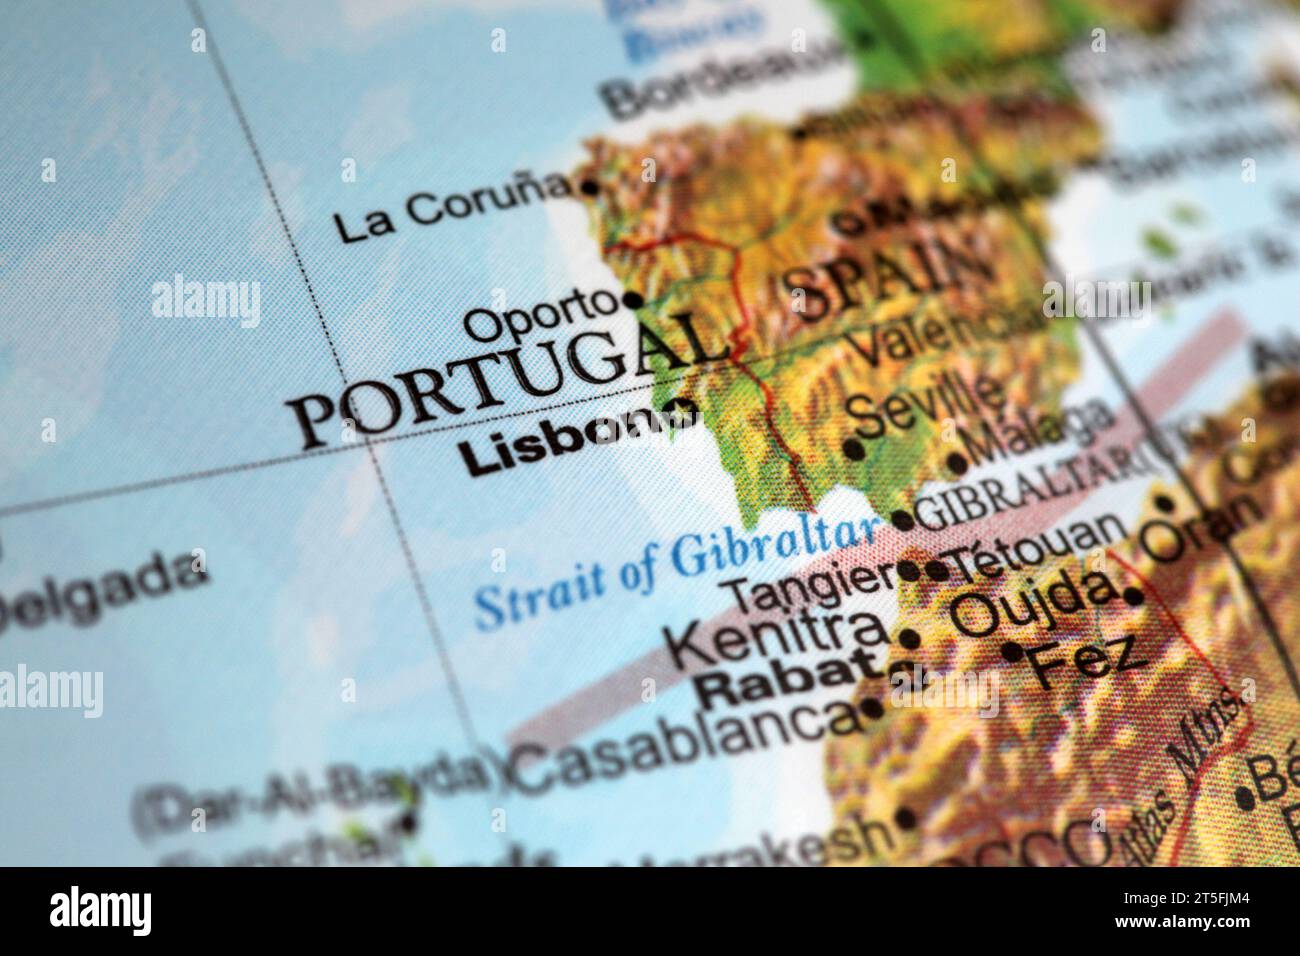 Lisbon Portugal on a world globe. Deliberate Shallow depth of field Stock Photo